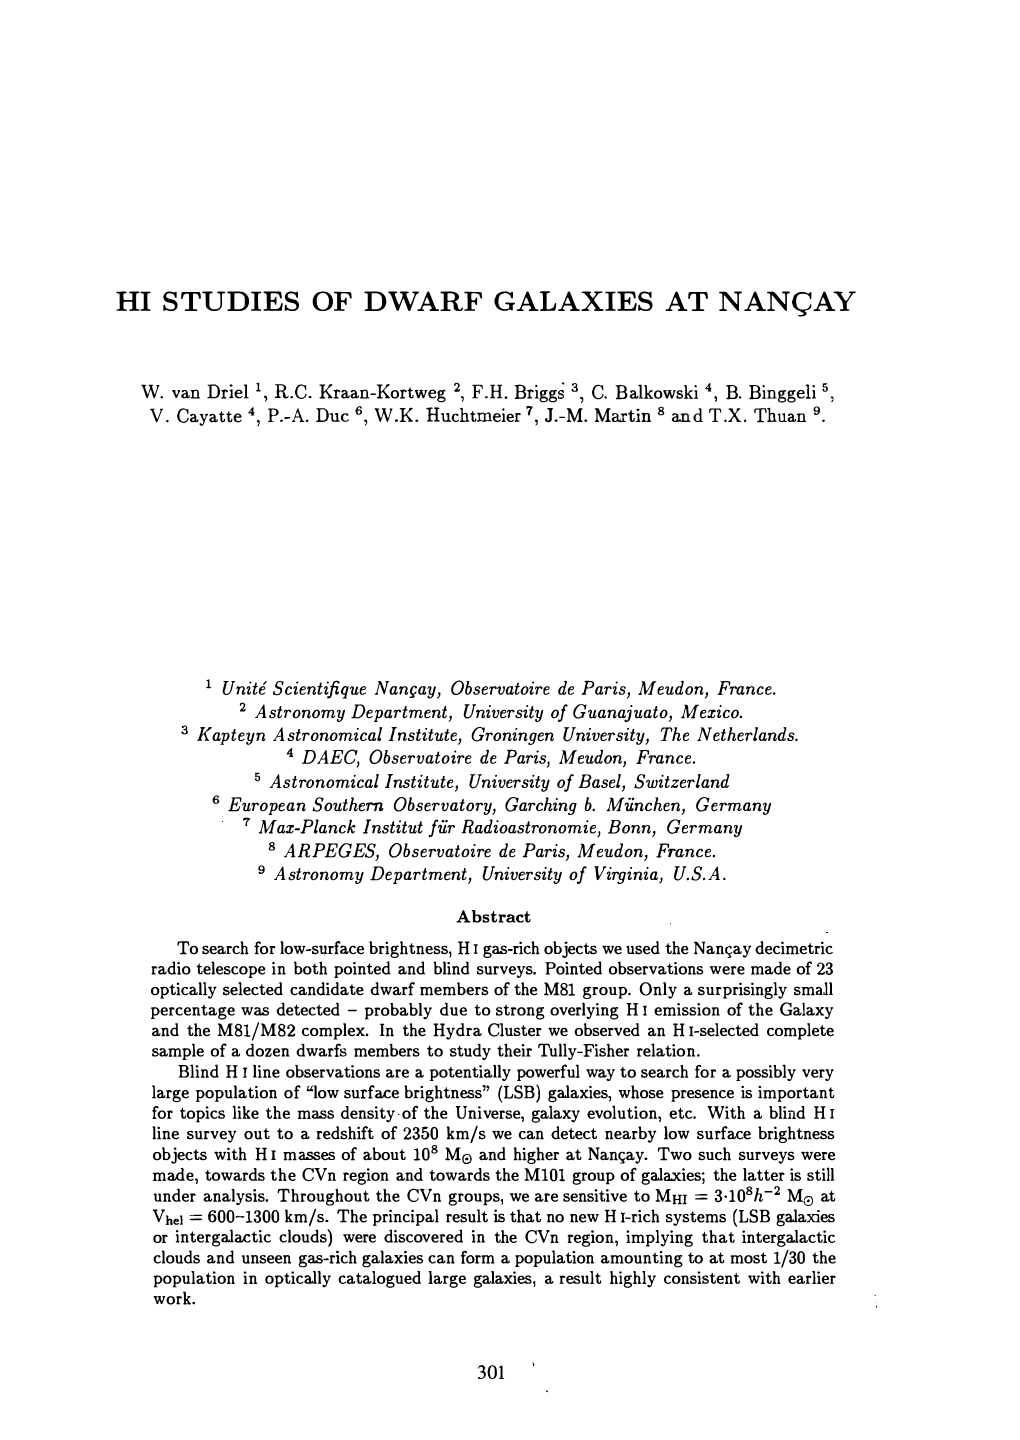 Hi Studies of Dwarf Galaxies at Nanqay